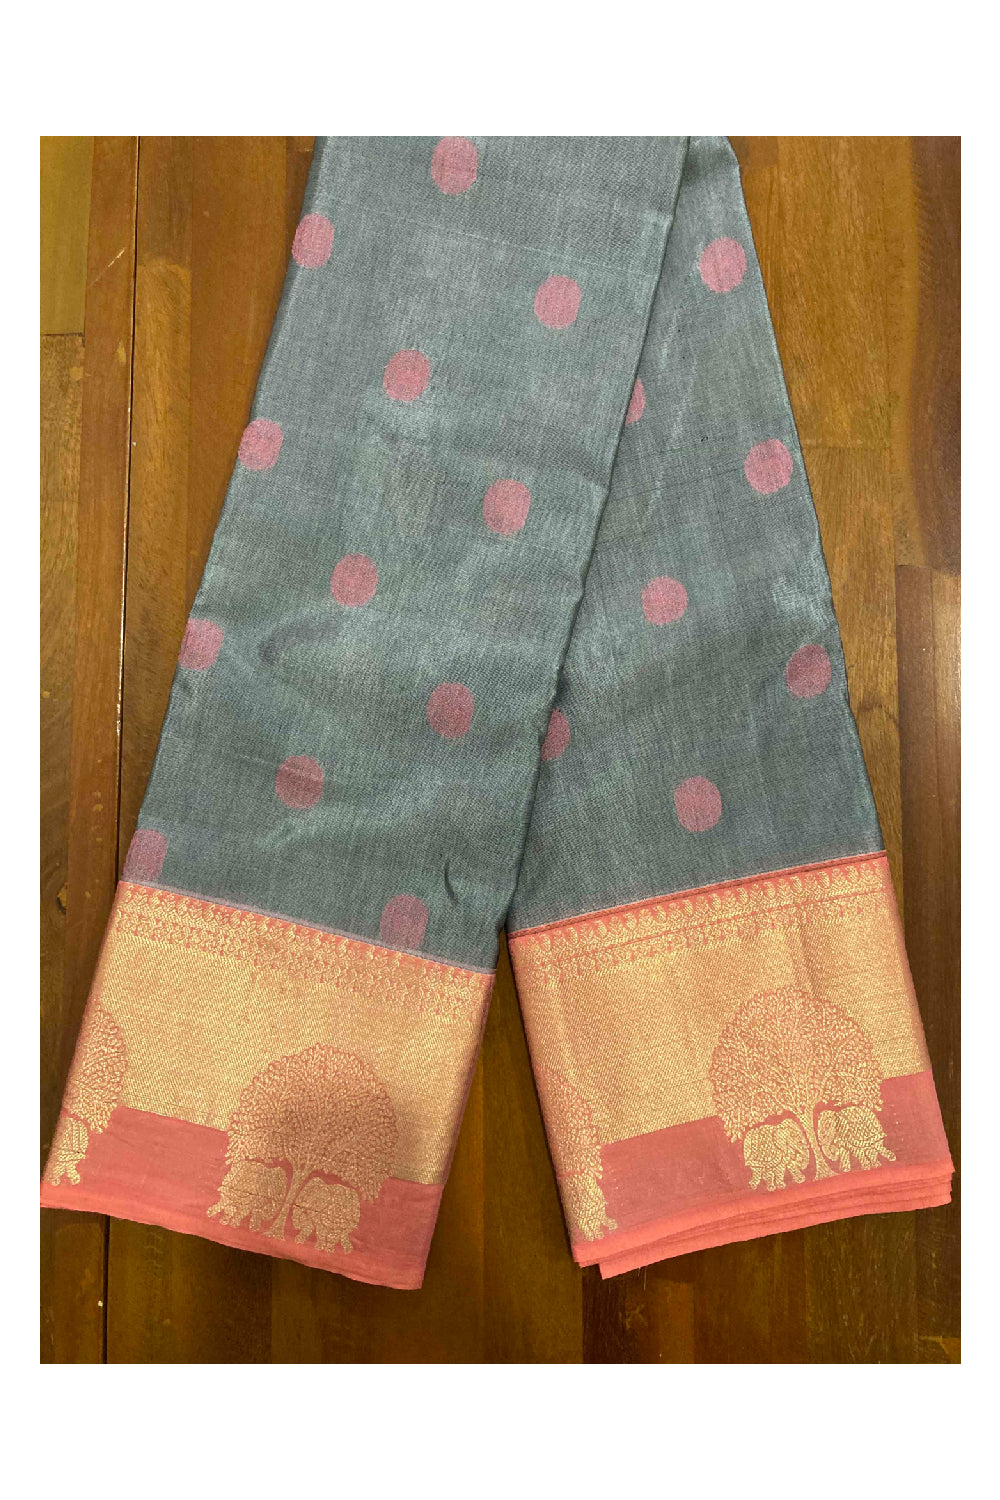 Southloom Handloom Pure Silk Kanchipuram Saree in Grey Polka Motifs